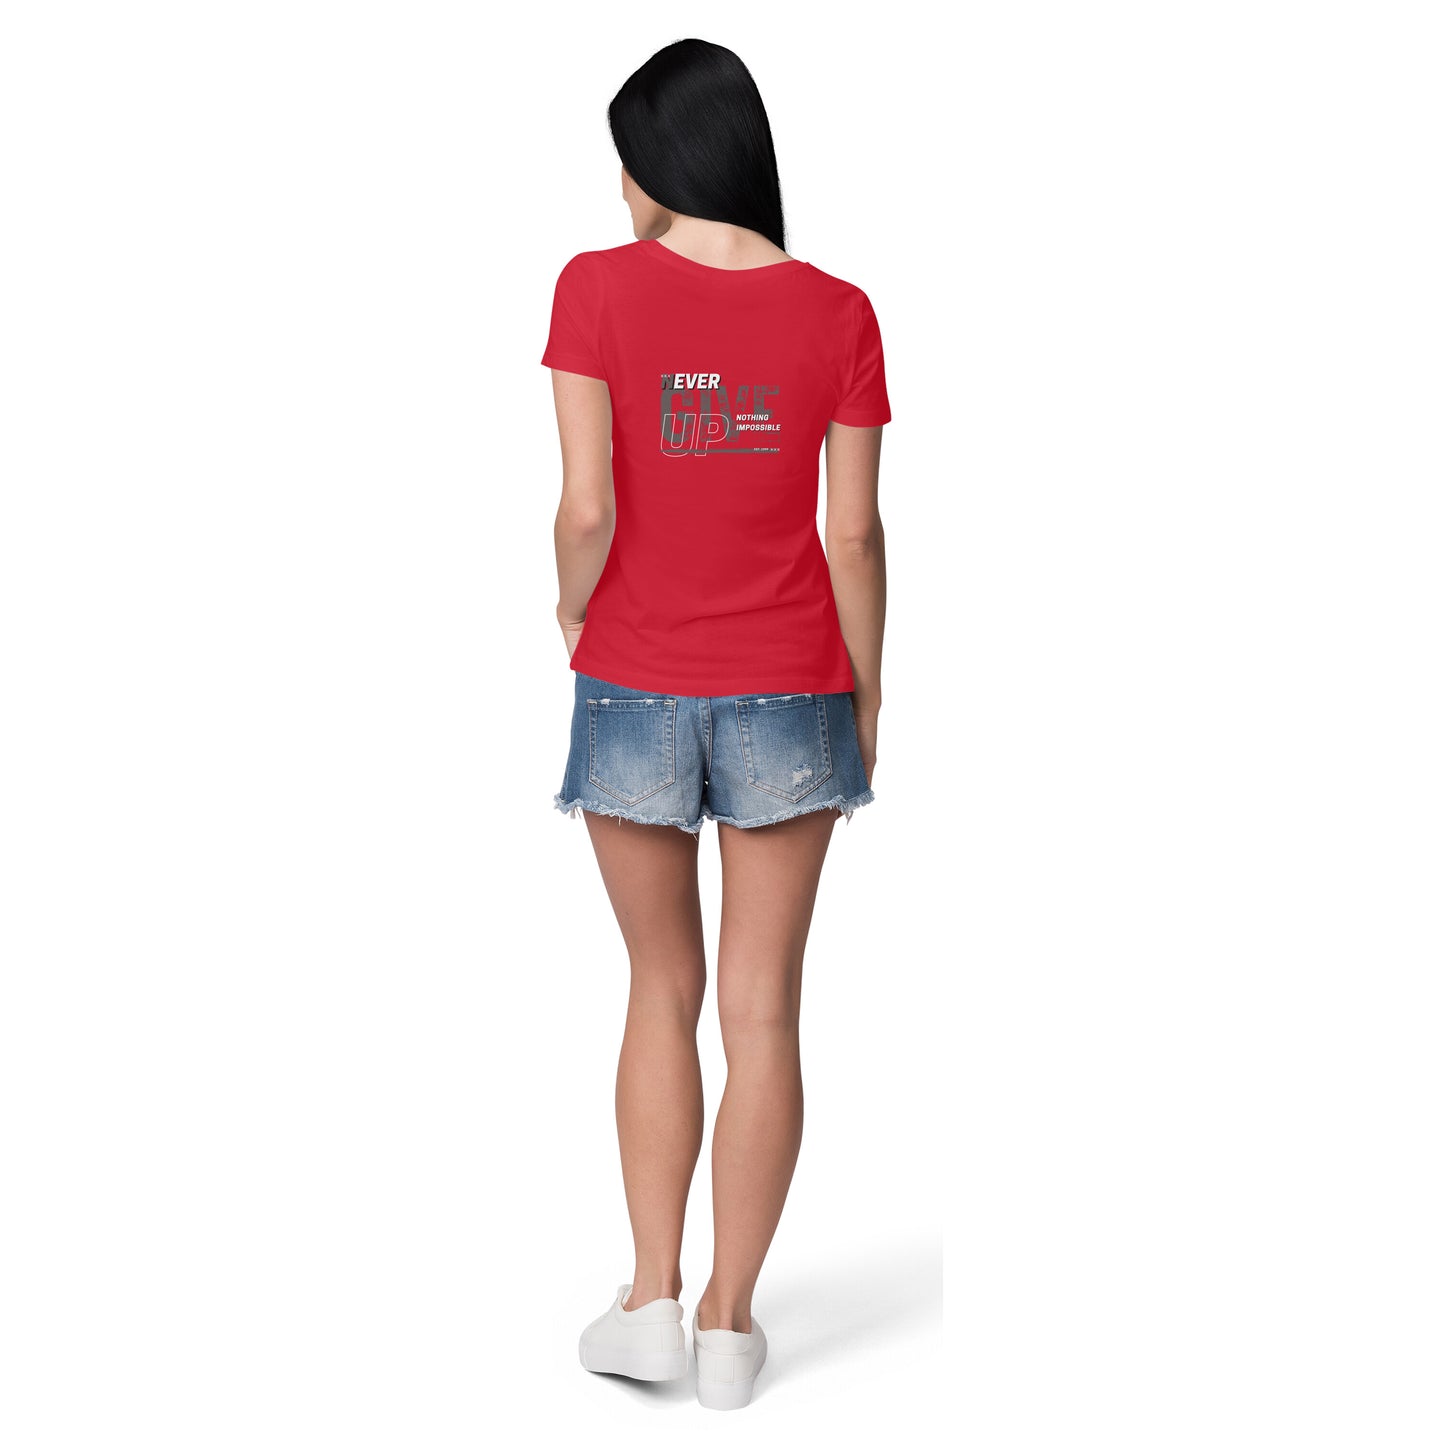 Sleek Tshirt - Slogan - Happiness is a journey - Back & front design - Women